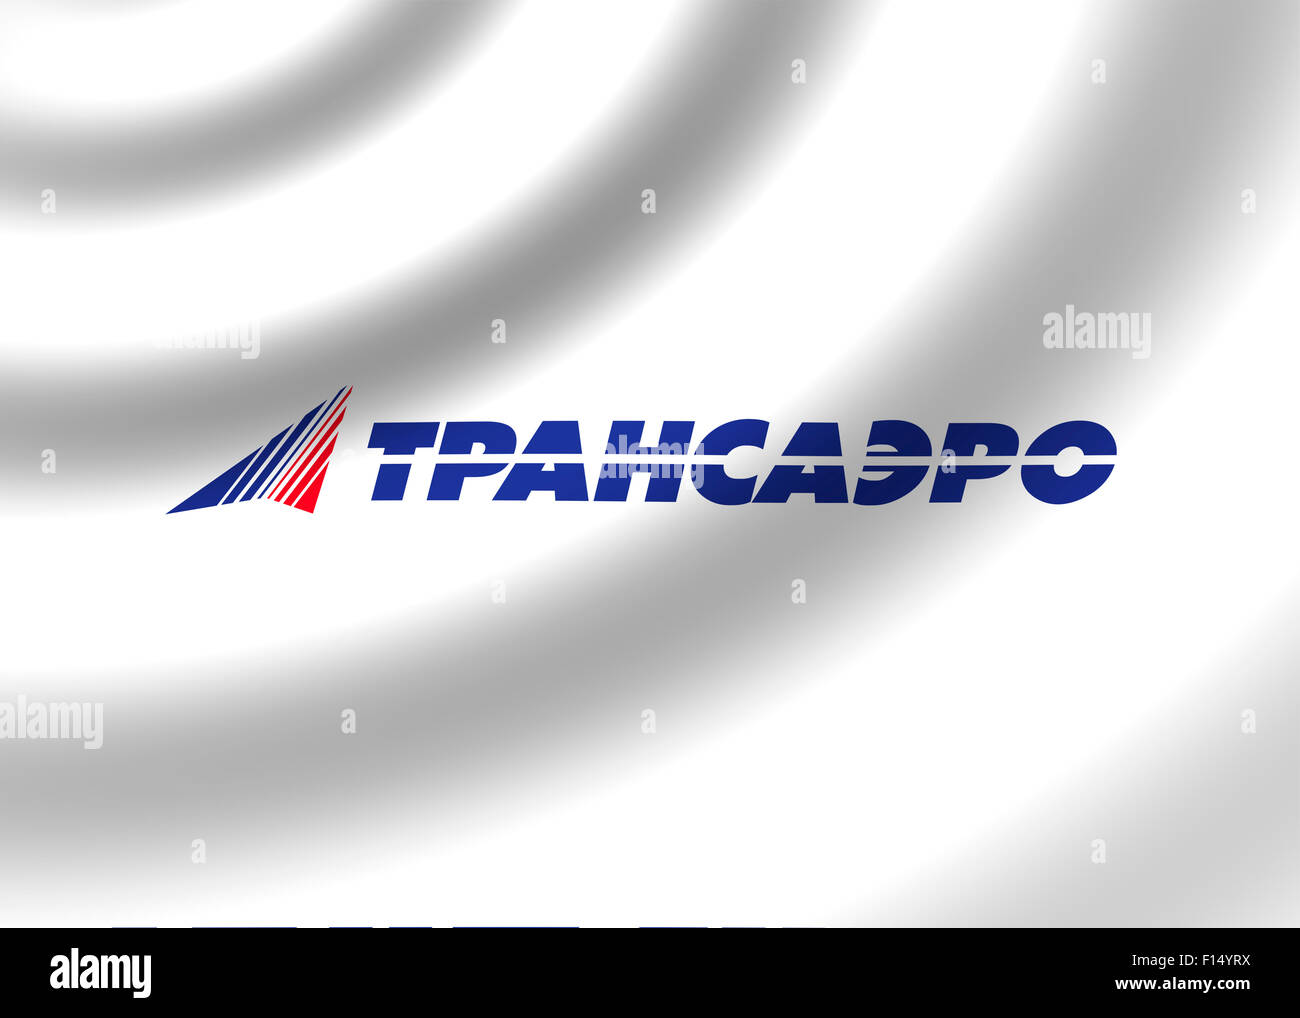 Trans aero icona logo bandiera emblema segno Foto Stock